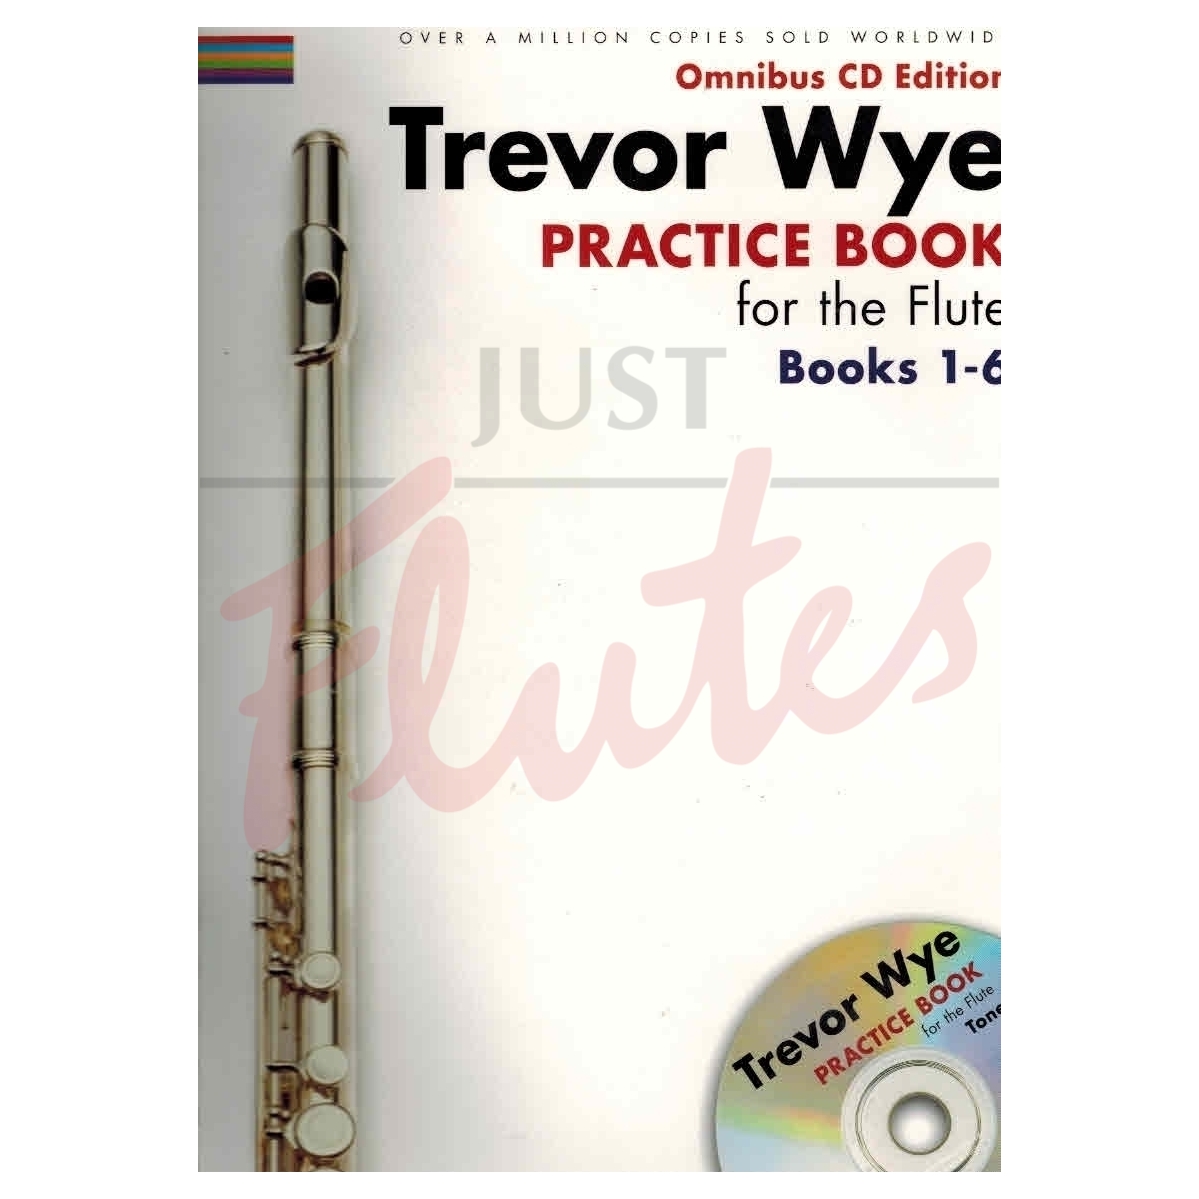 Trevor Wye Practice Book for the Flute Omnibus Edition Books 16
Epub-Ebook